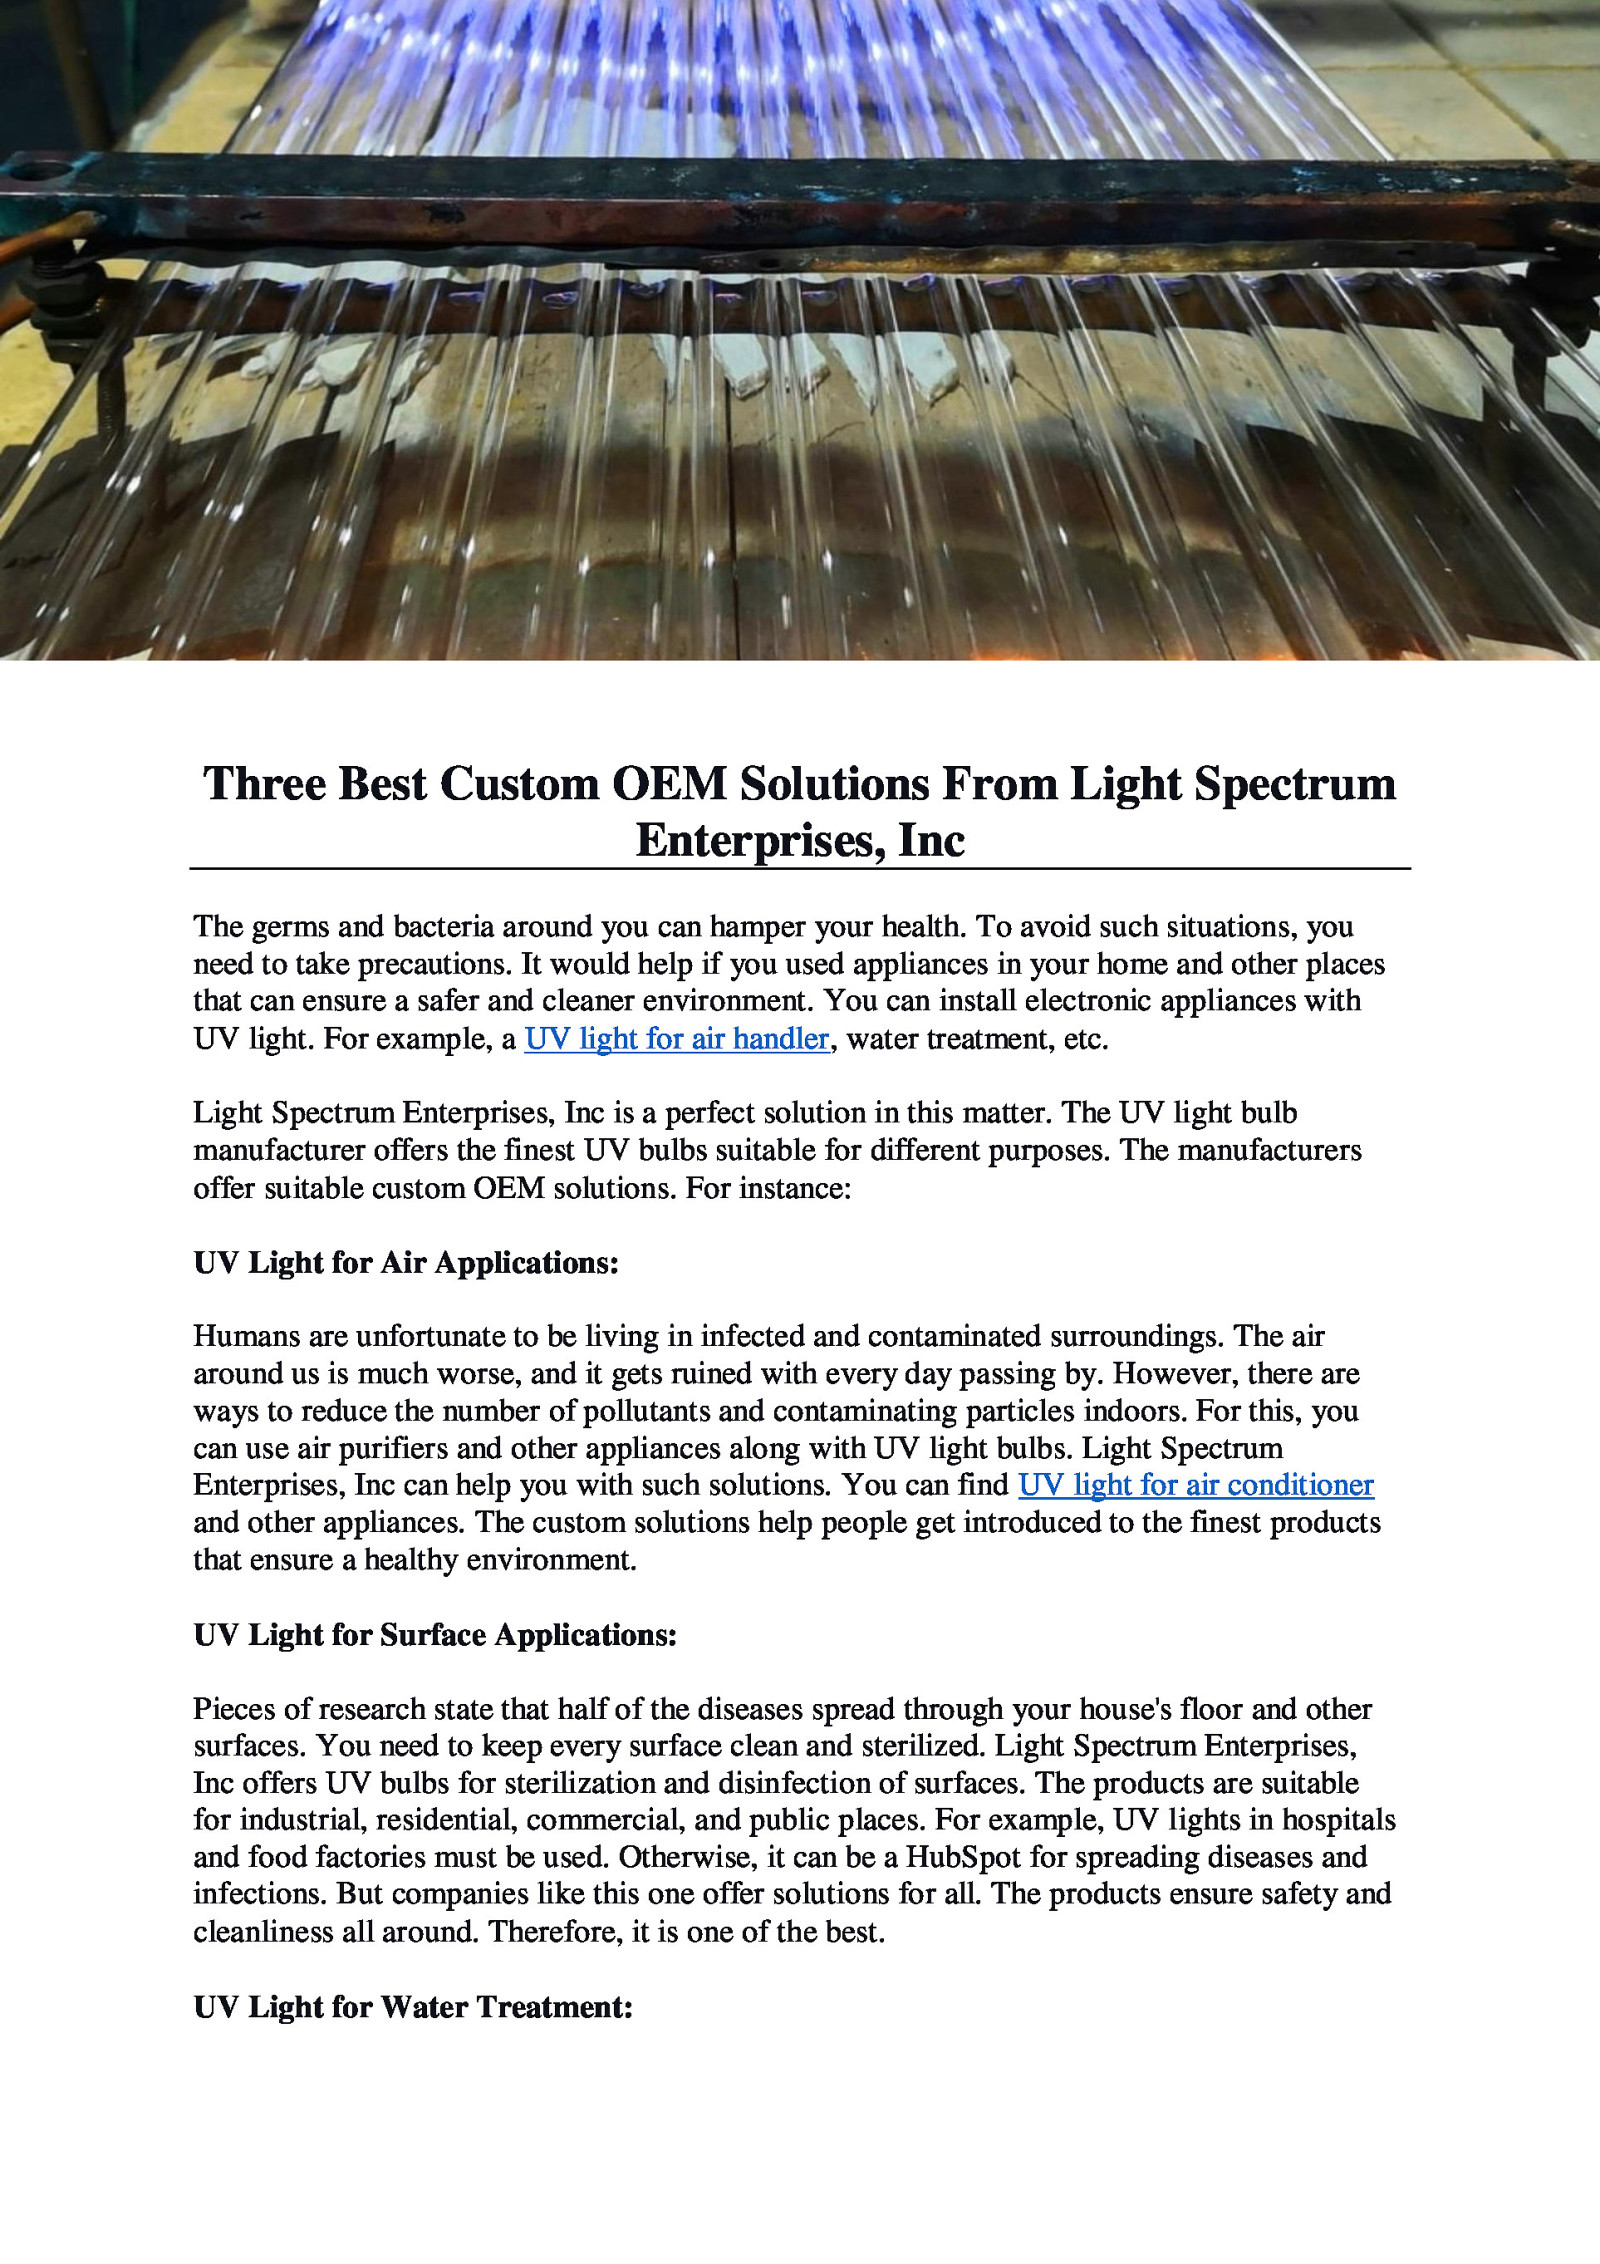 Three Best Custom OEM Solutions From Light Spectrum Enterprises, Inc